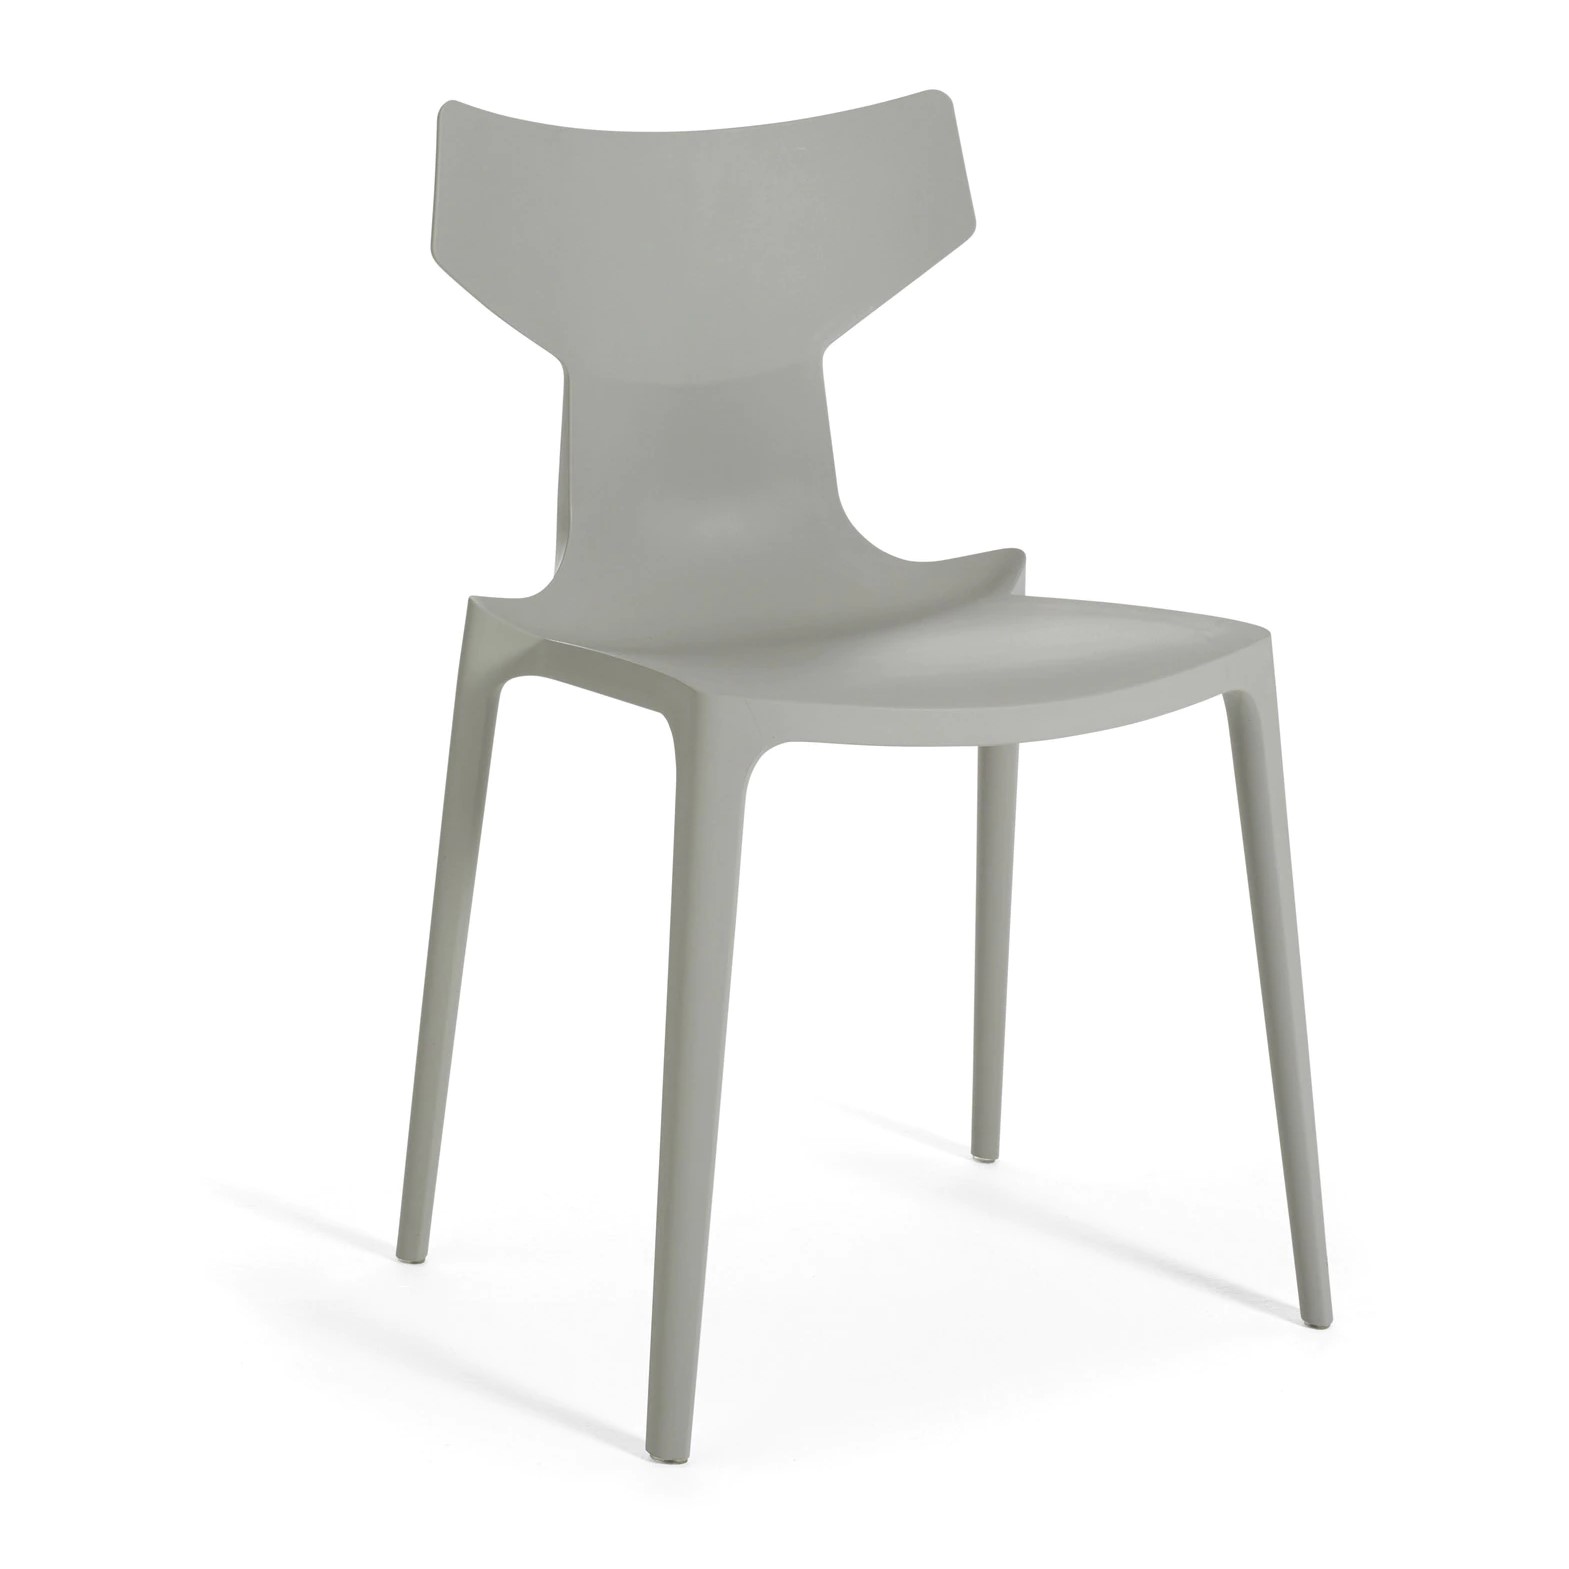 RE-CHAIR καρέκλα - συσκευασία 2 τεμαχίων Image 7